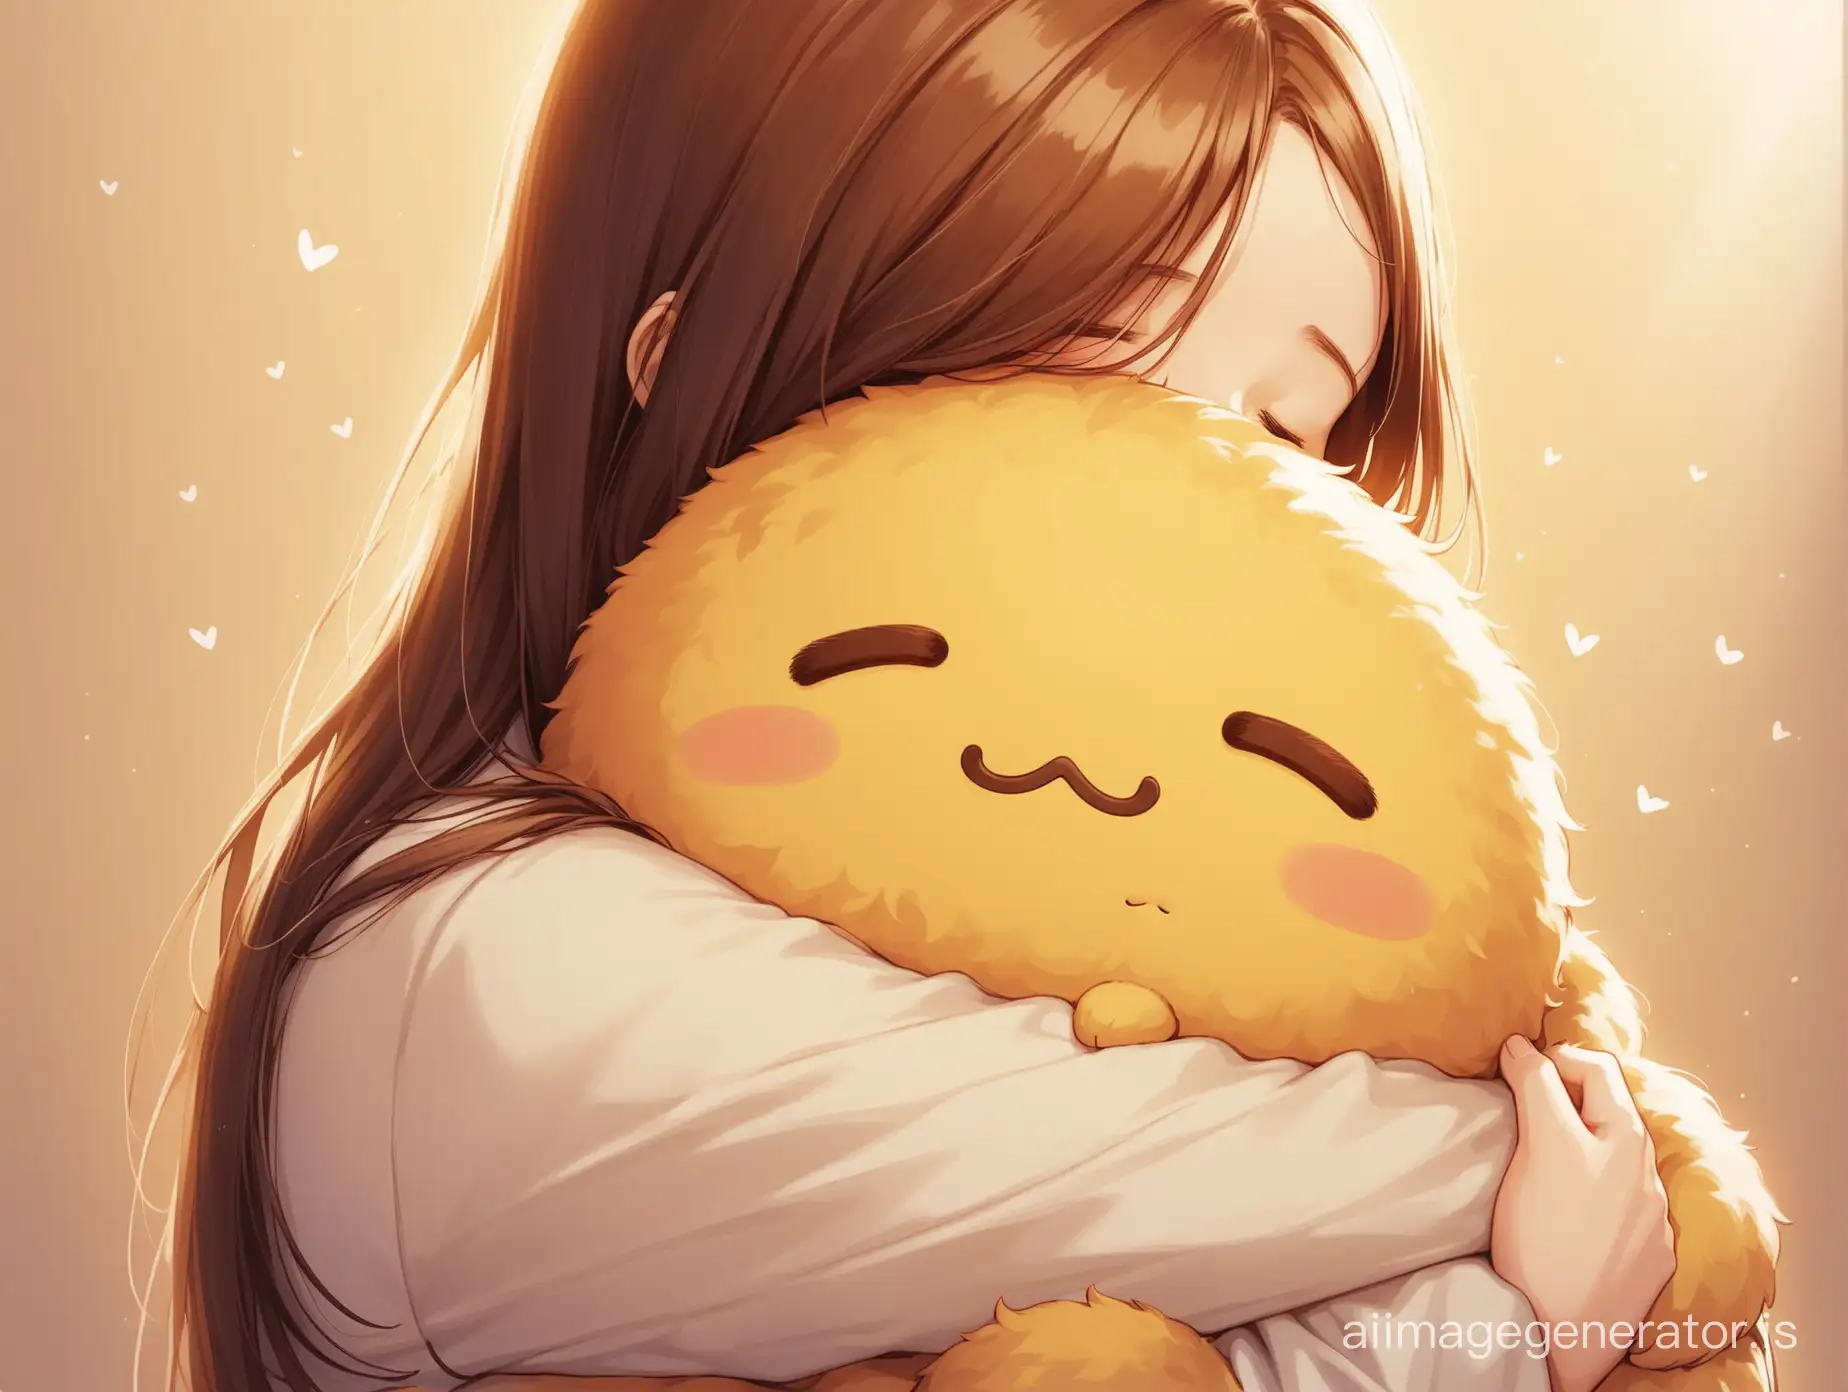 hug friend, comfort, sympathy